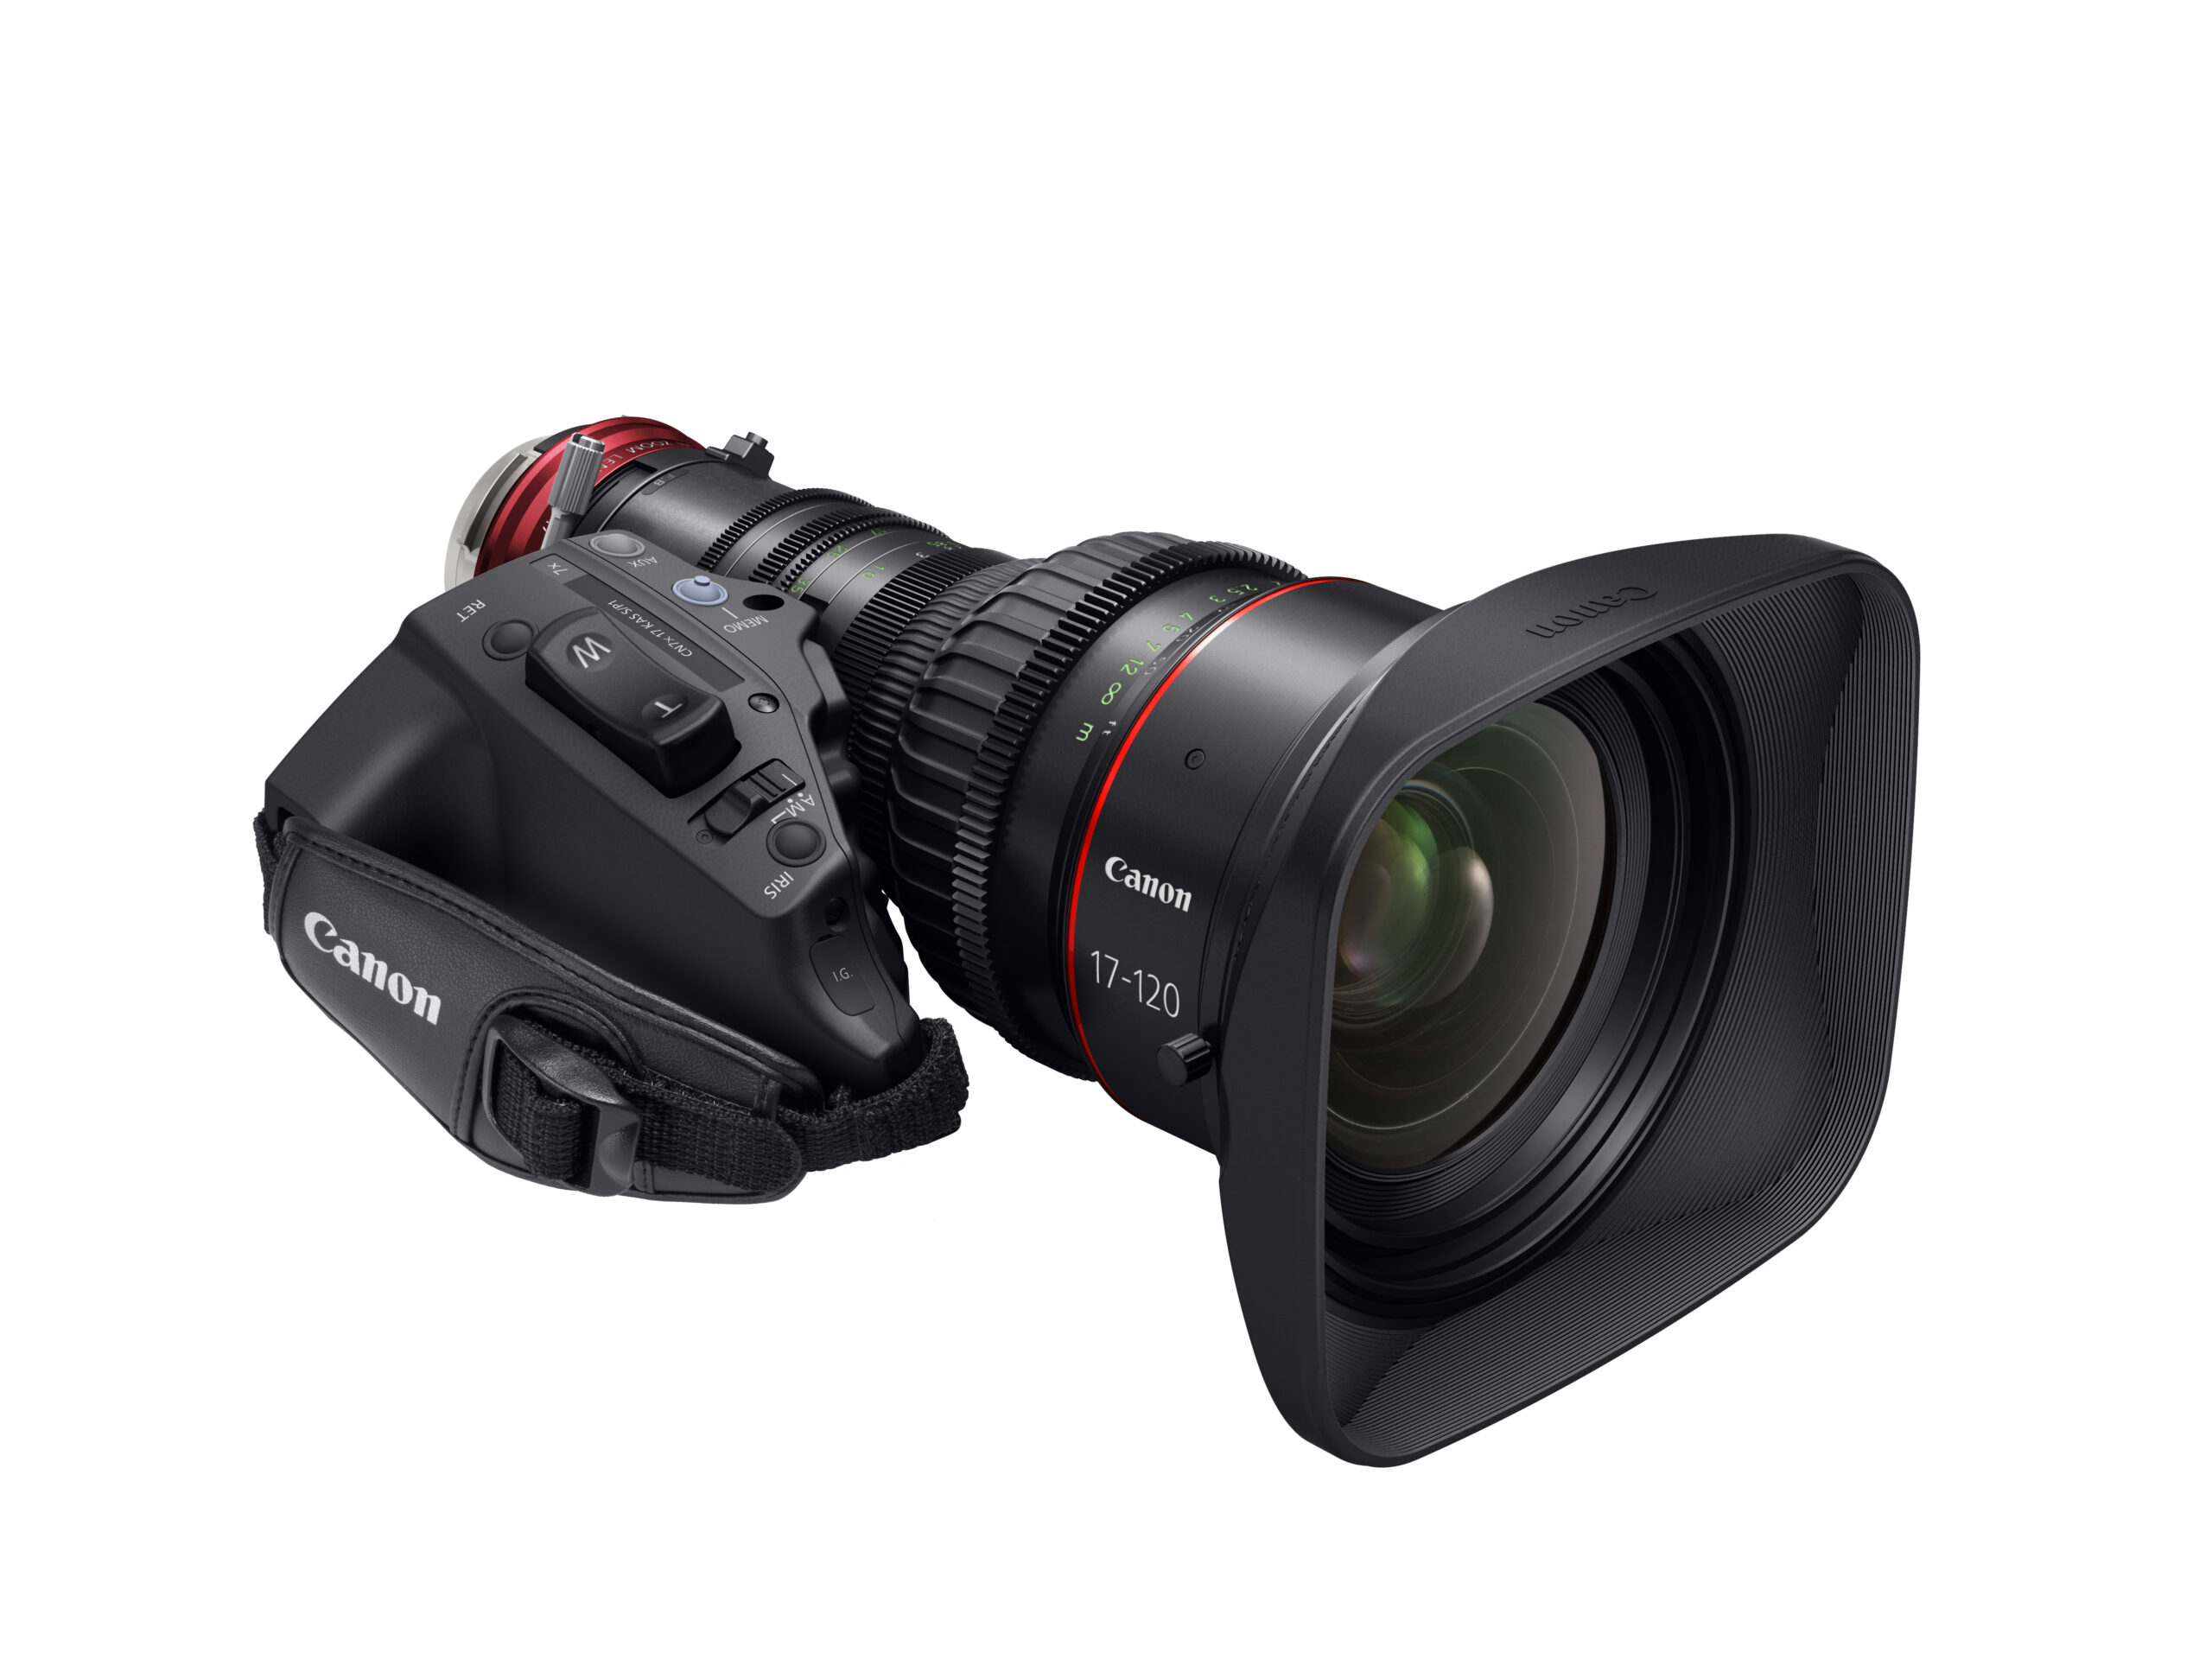 Canon CN7 17-120 Zoom Lens